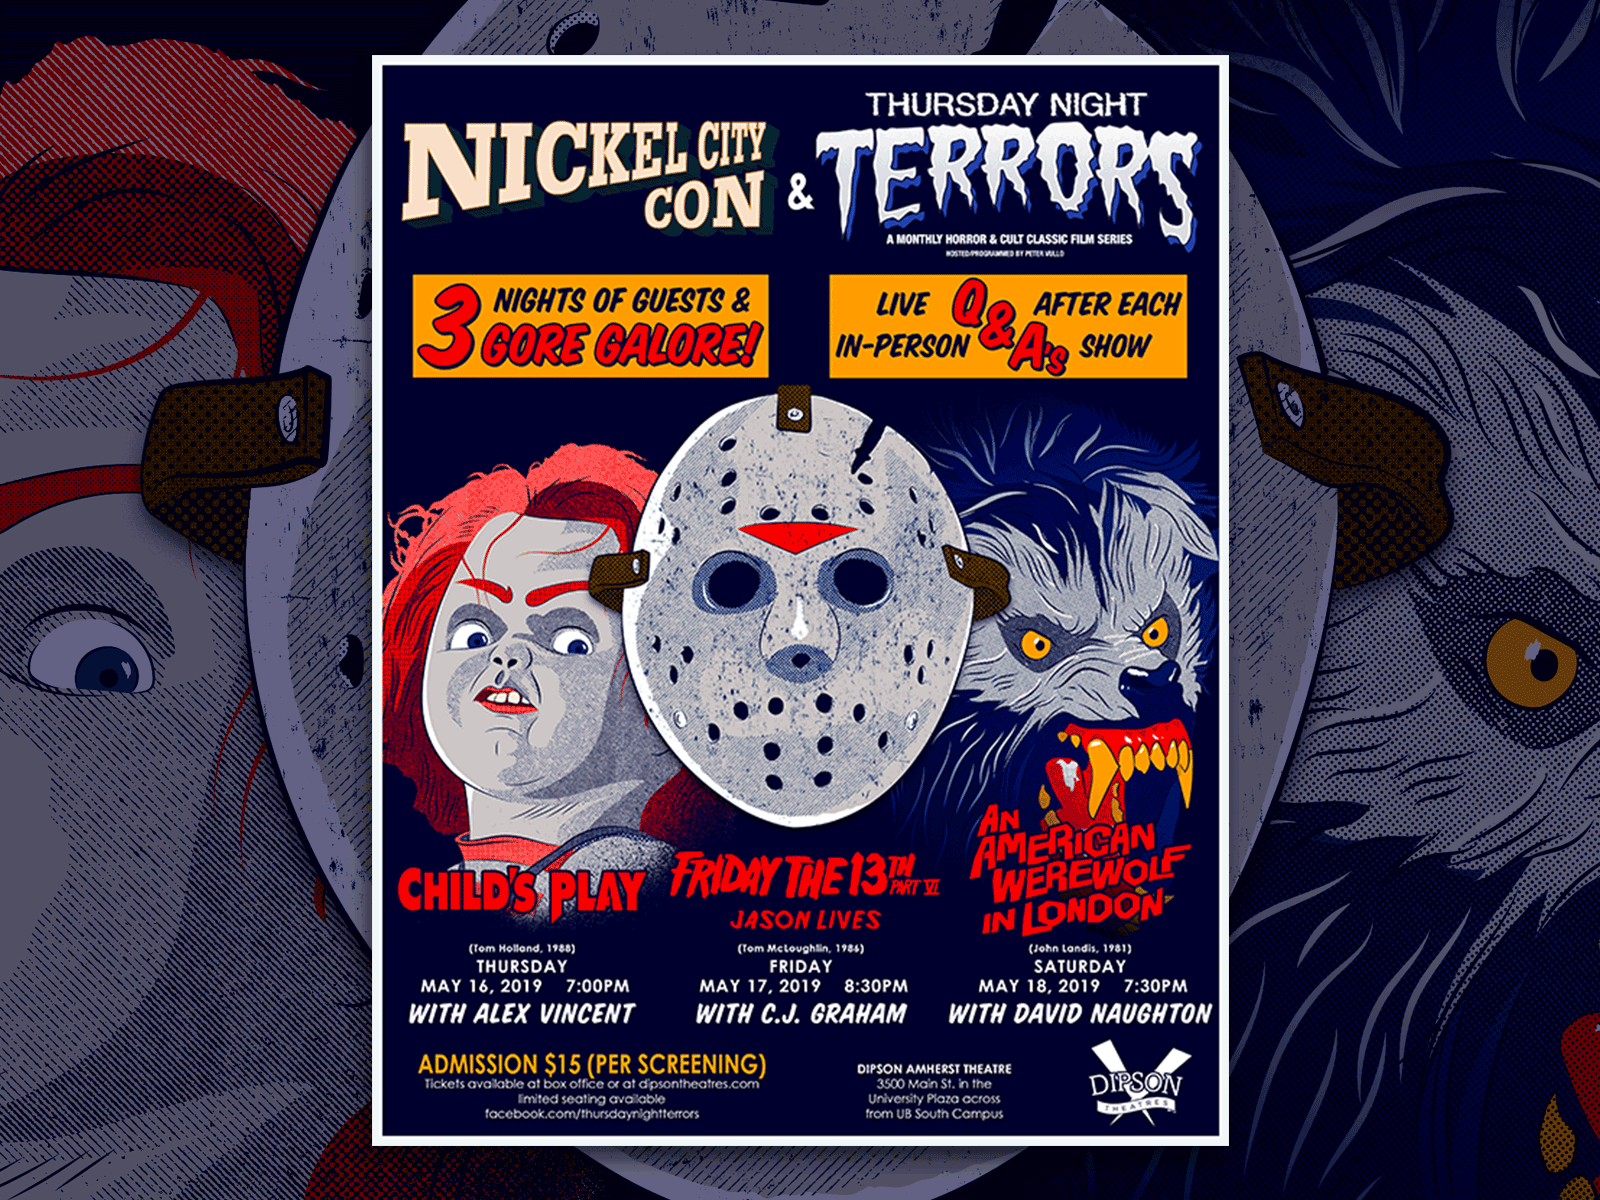 Thursday Night Terrors Nickel City Con 2019 Poster by Daniel P Morris